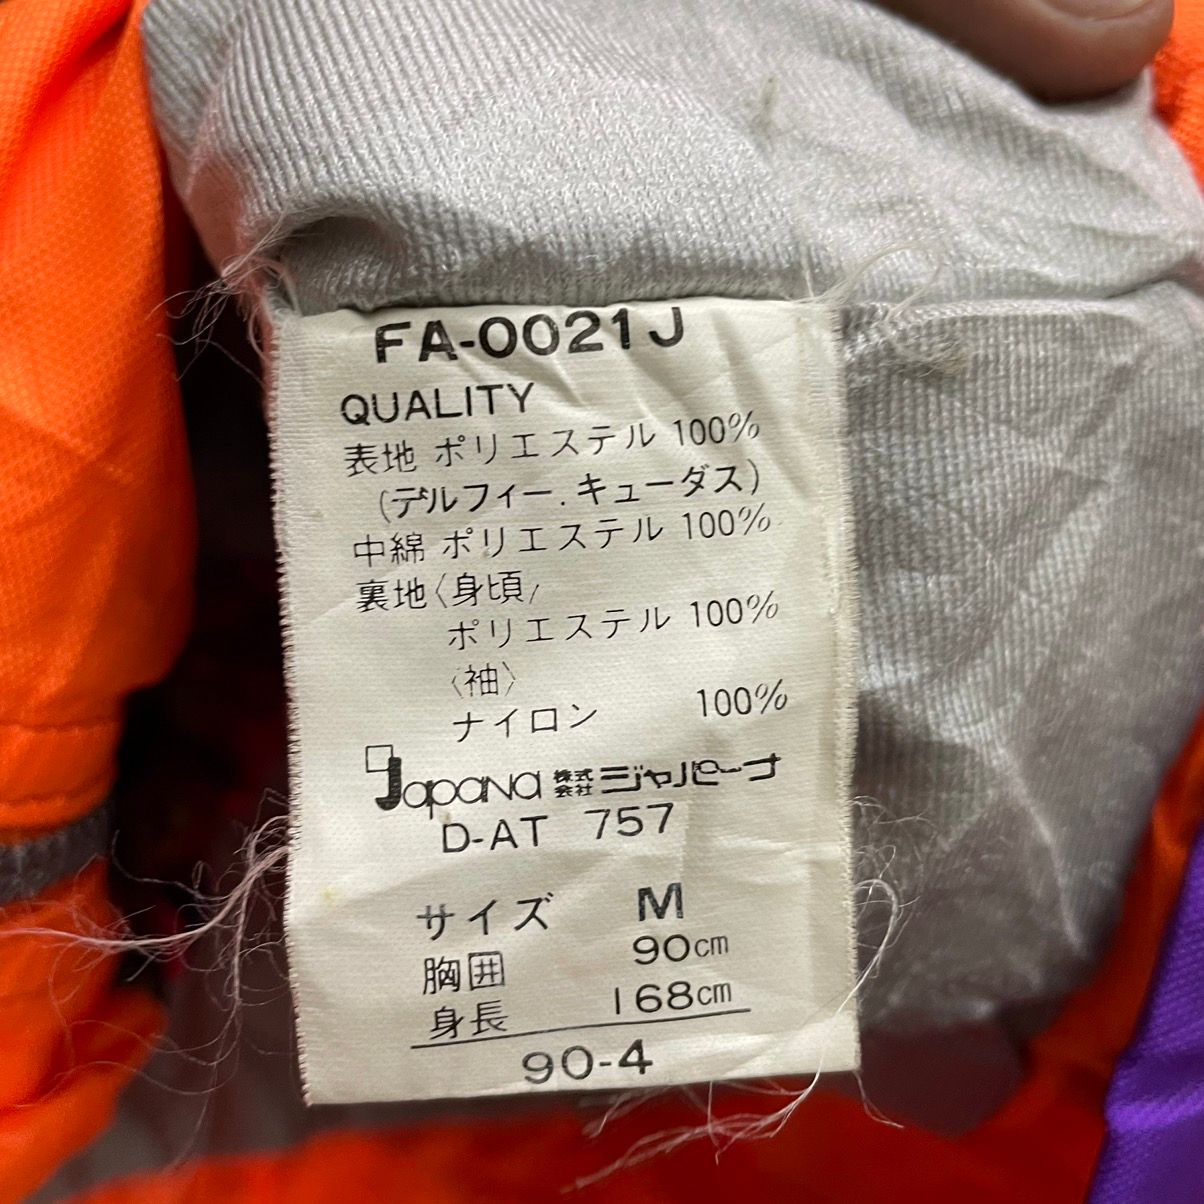 Japanese Brand 💥80s FABLICE ZERMATT ABSTRACK MULTICOLOUR JACKET Size M / US 6-8 / IT 42-44 - 10 Preview